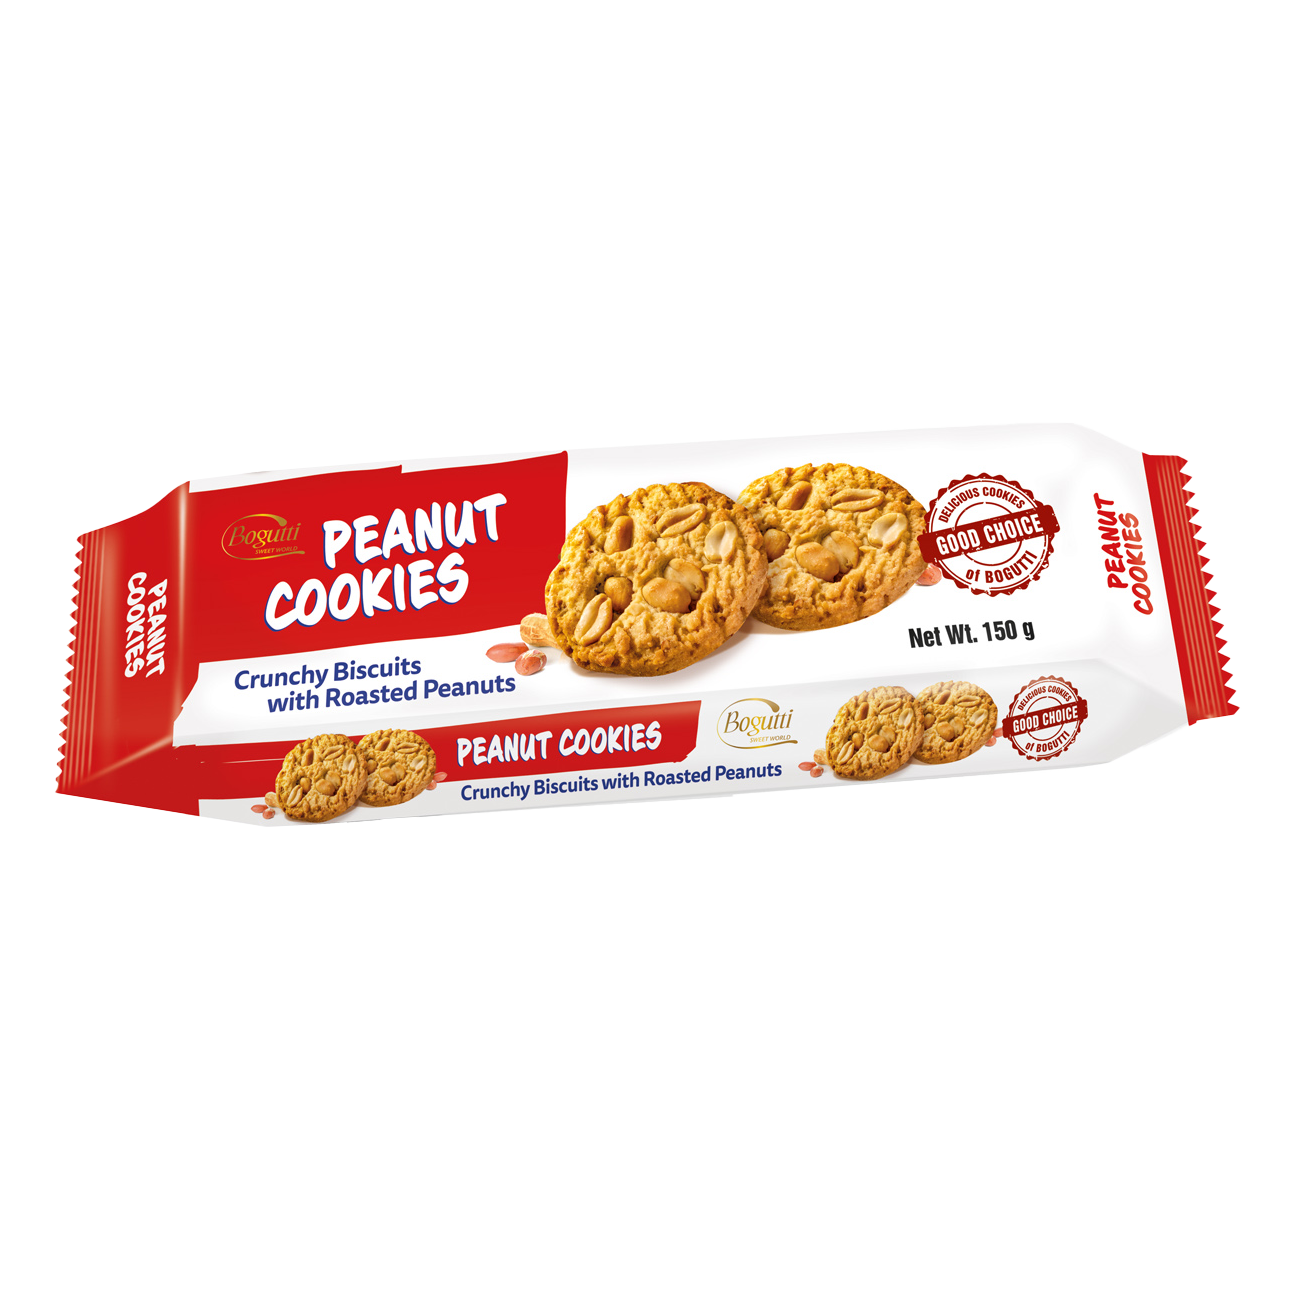 Peanut Cookies – Crunchy cookies with roasted peanuts